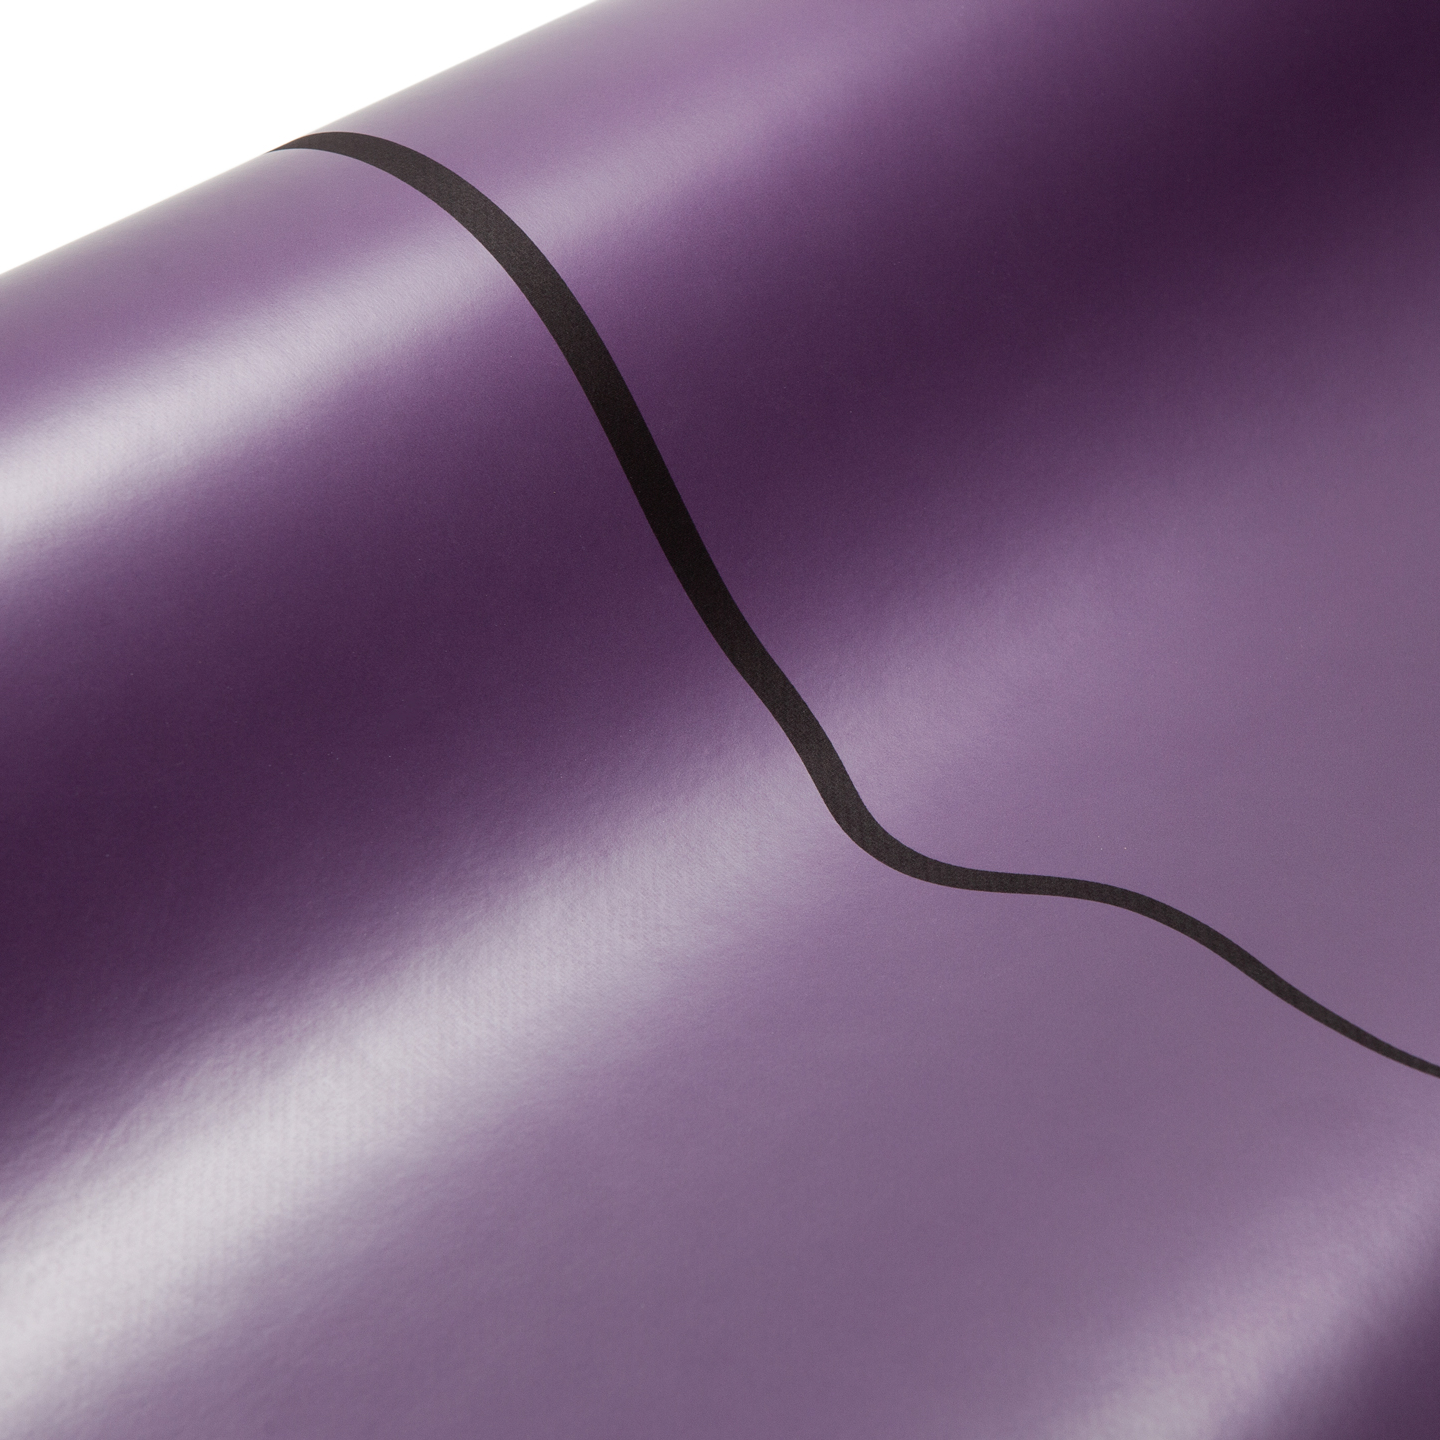 Mocana nimbus purple yoga mat with alignment and extra grip